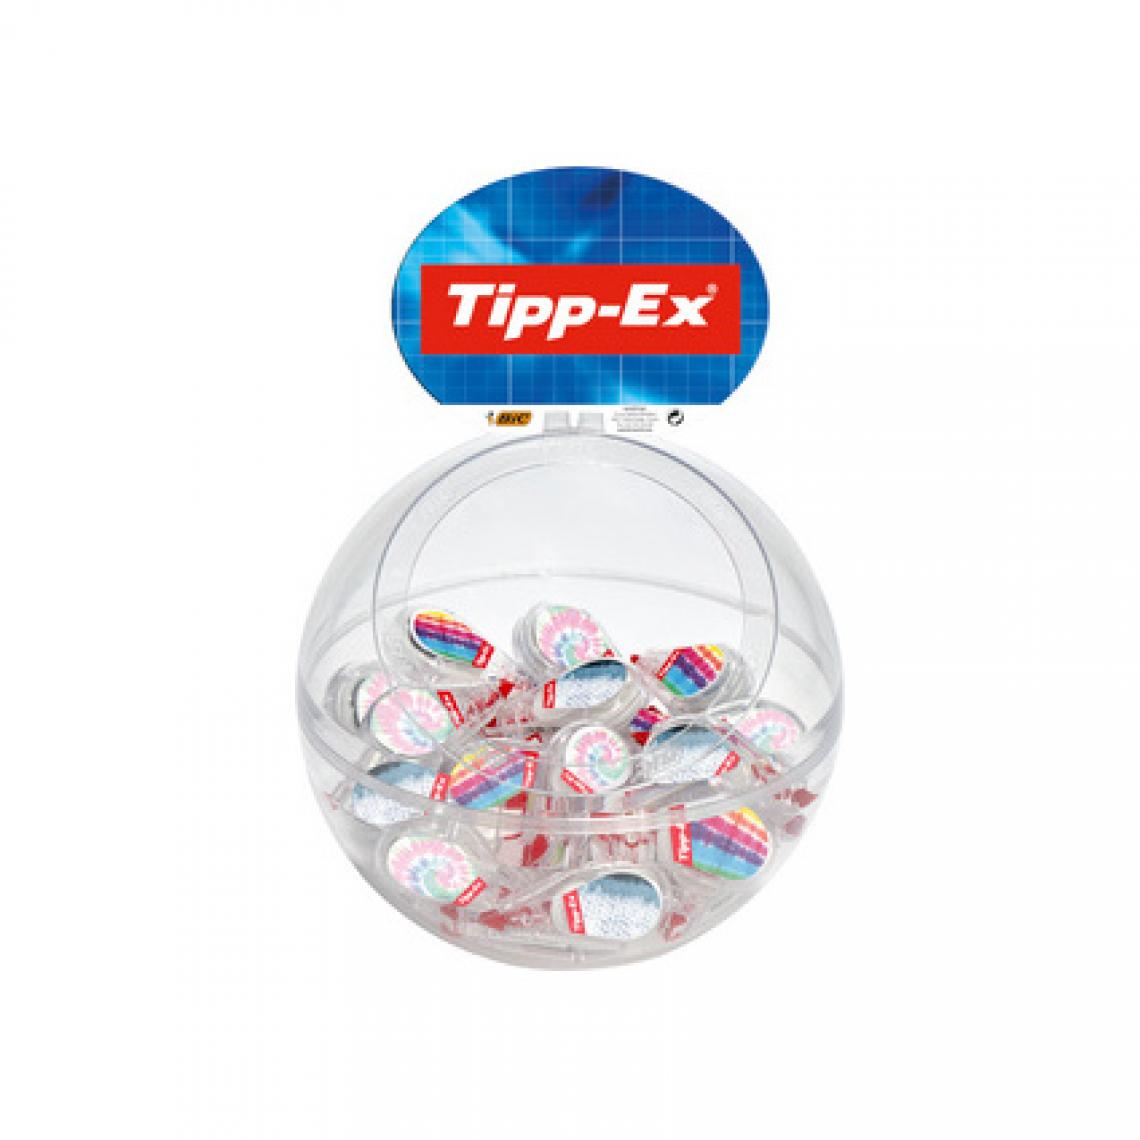 Tippex - Tipp-Ex Roller correcteur 'Mini Pocket Mouse Dekor' () - Accessoires Bureau